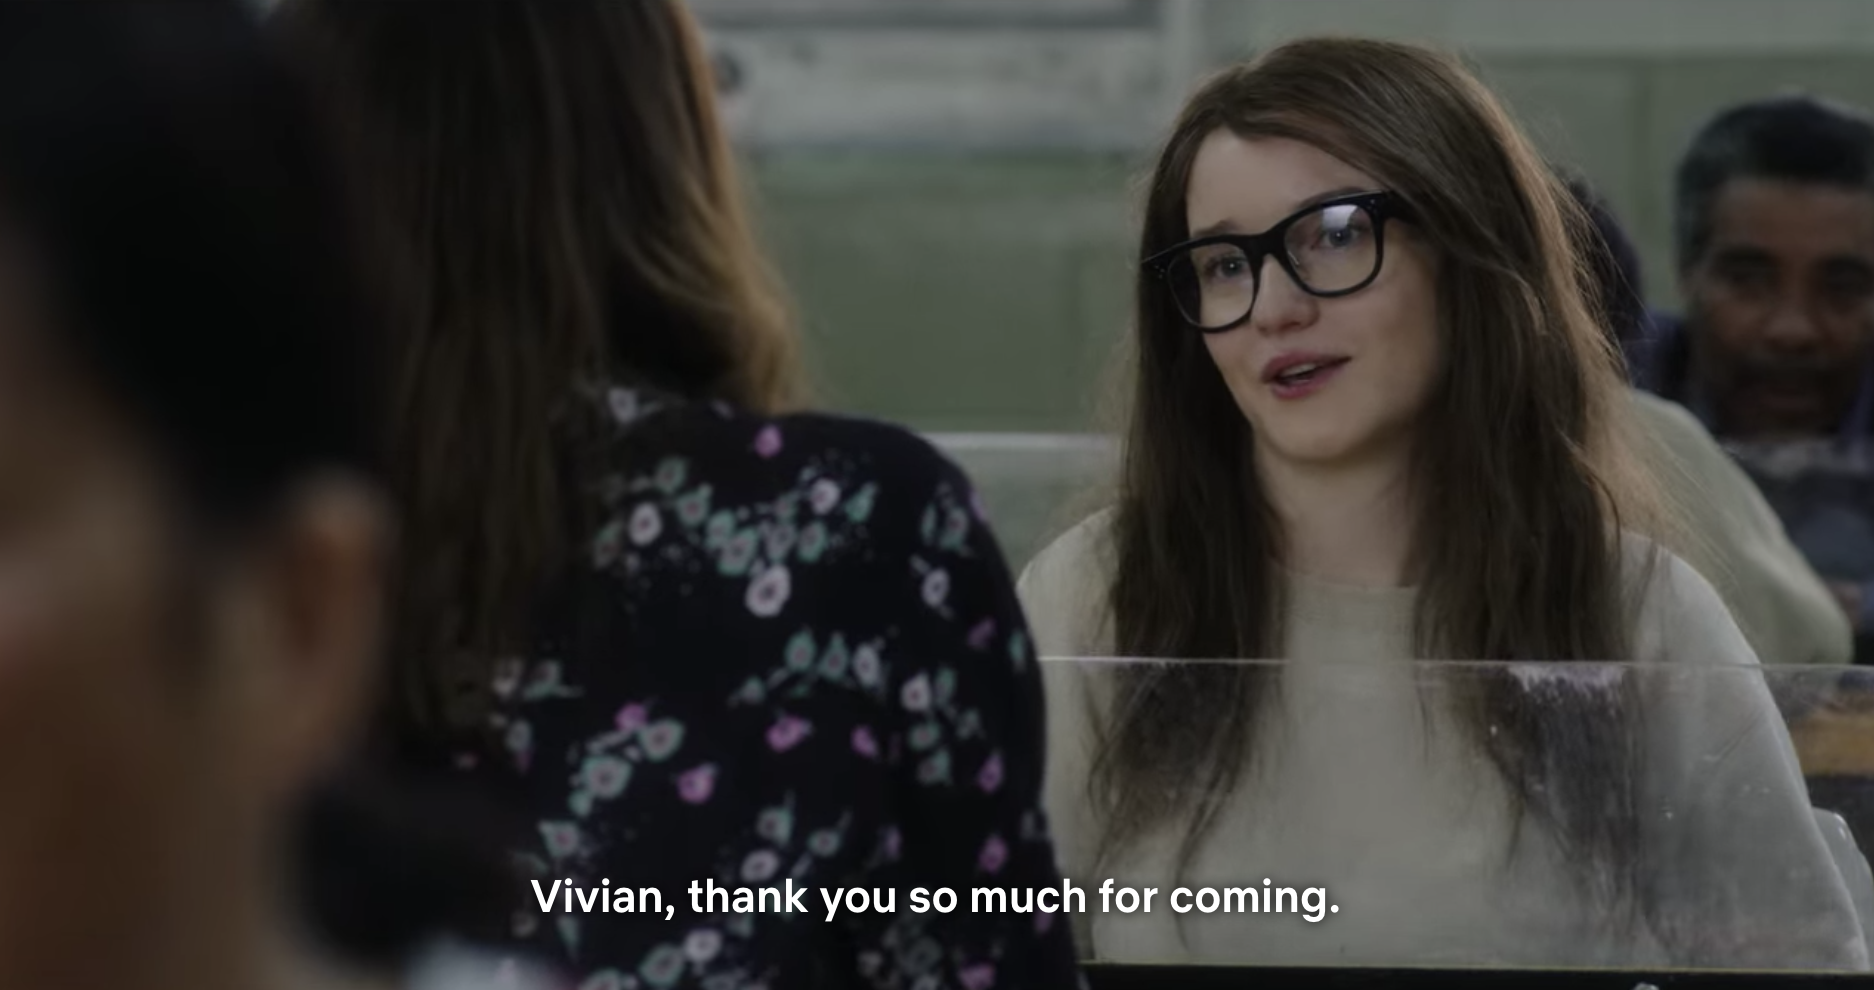 Vivian meeting Anna in prison